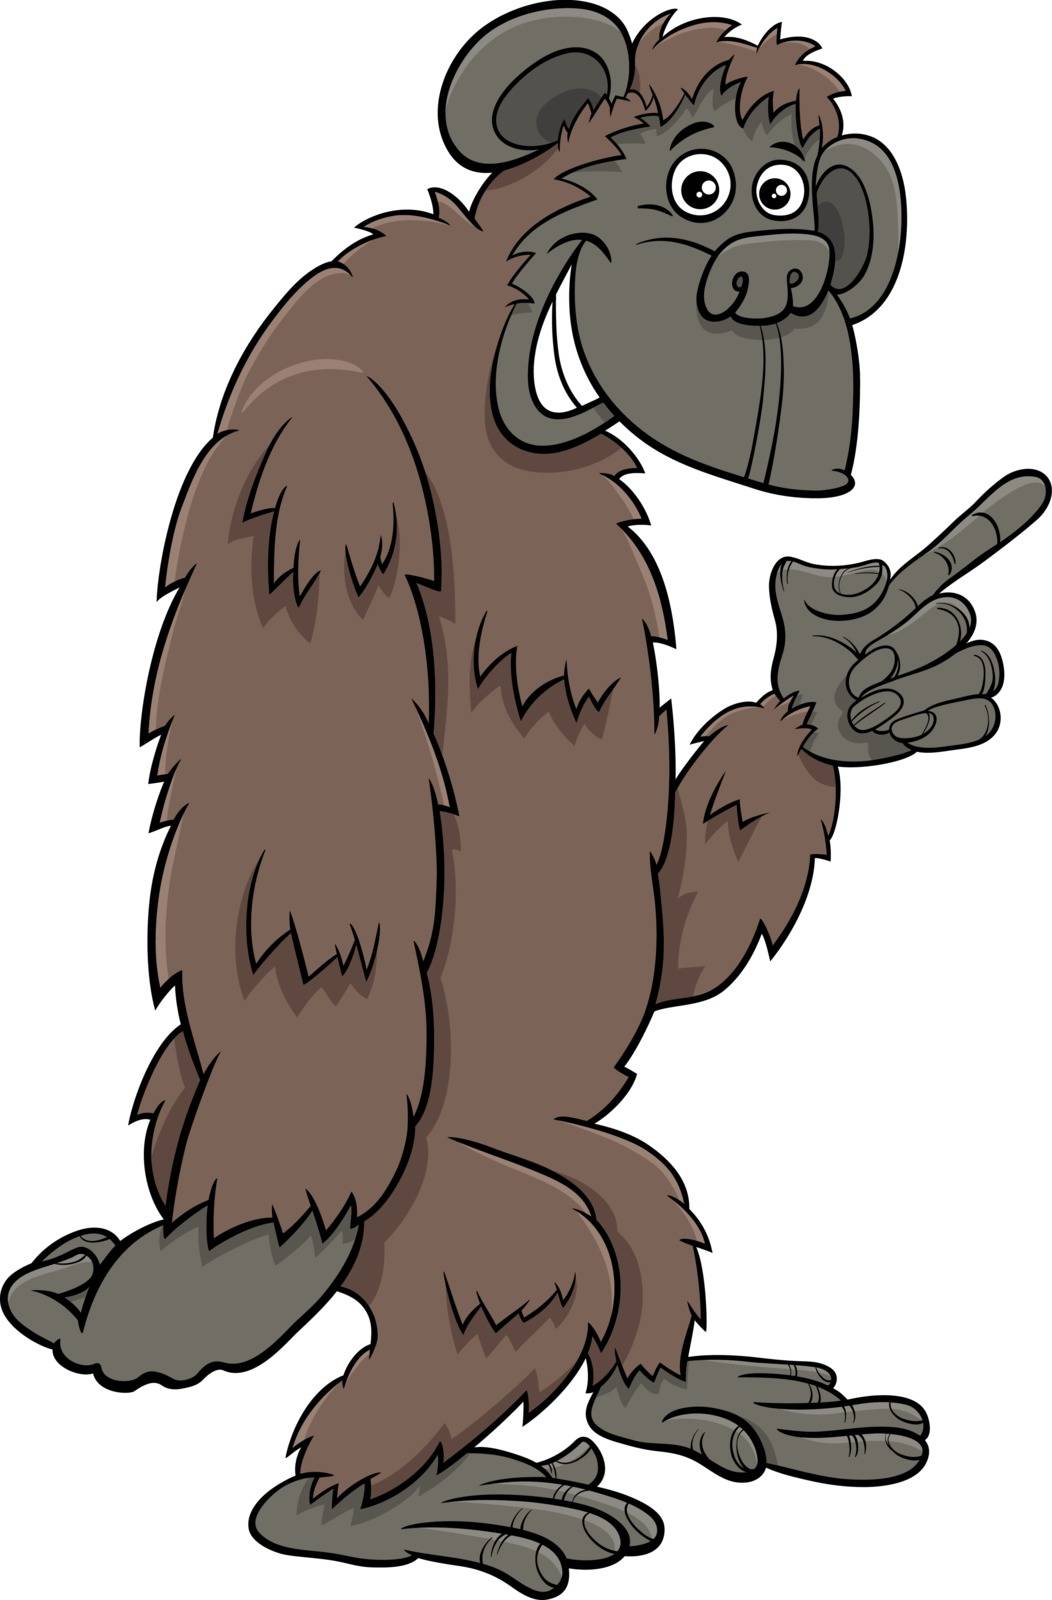 Cartoon illustration of gorilla ape comic animal character